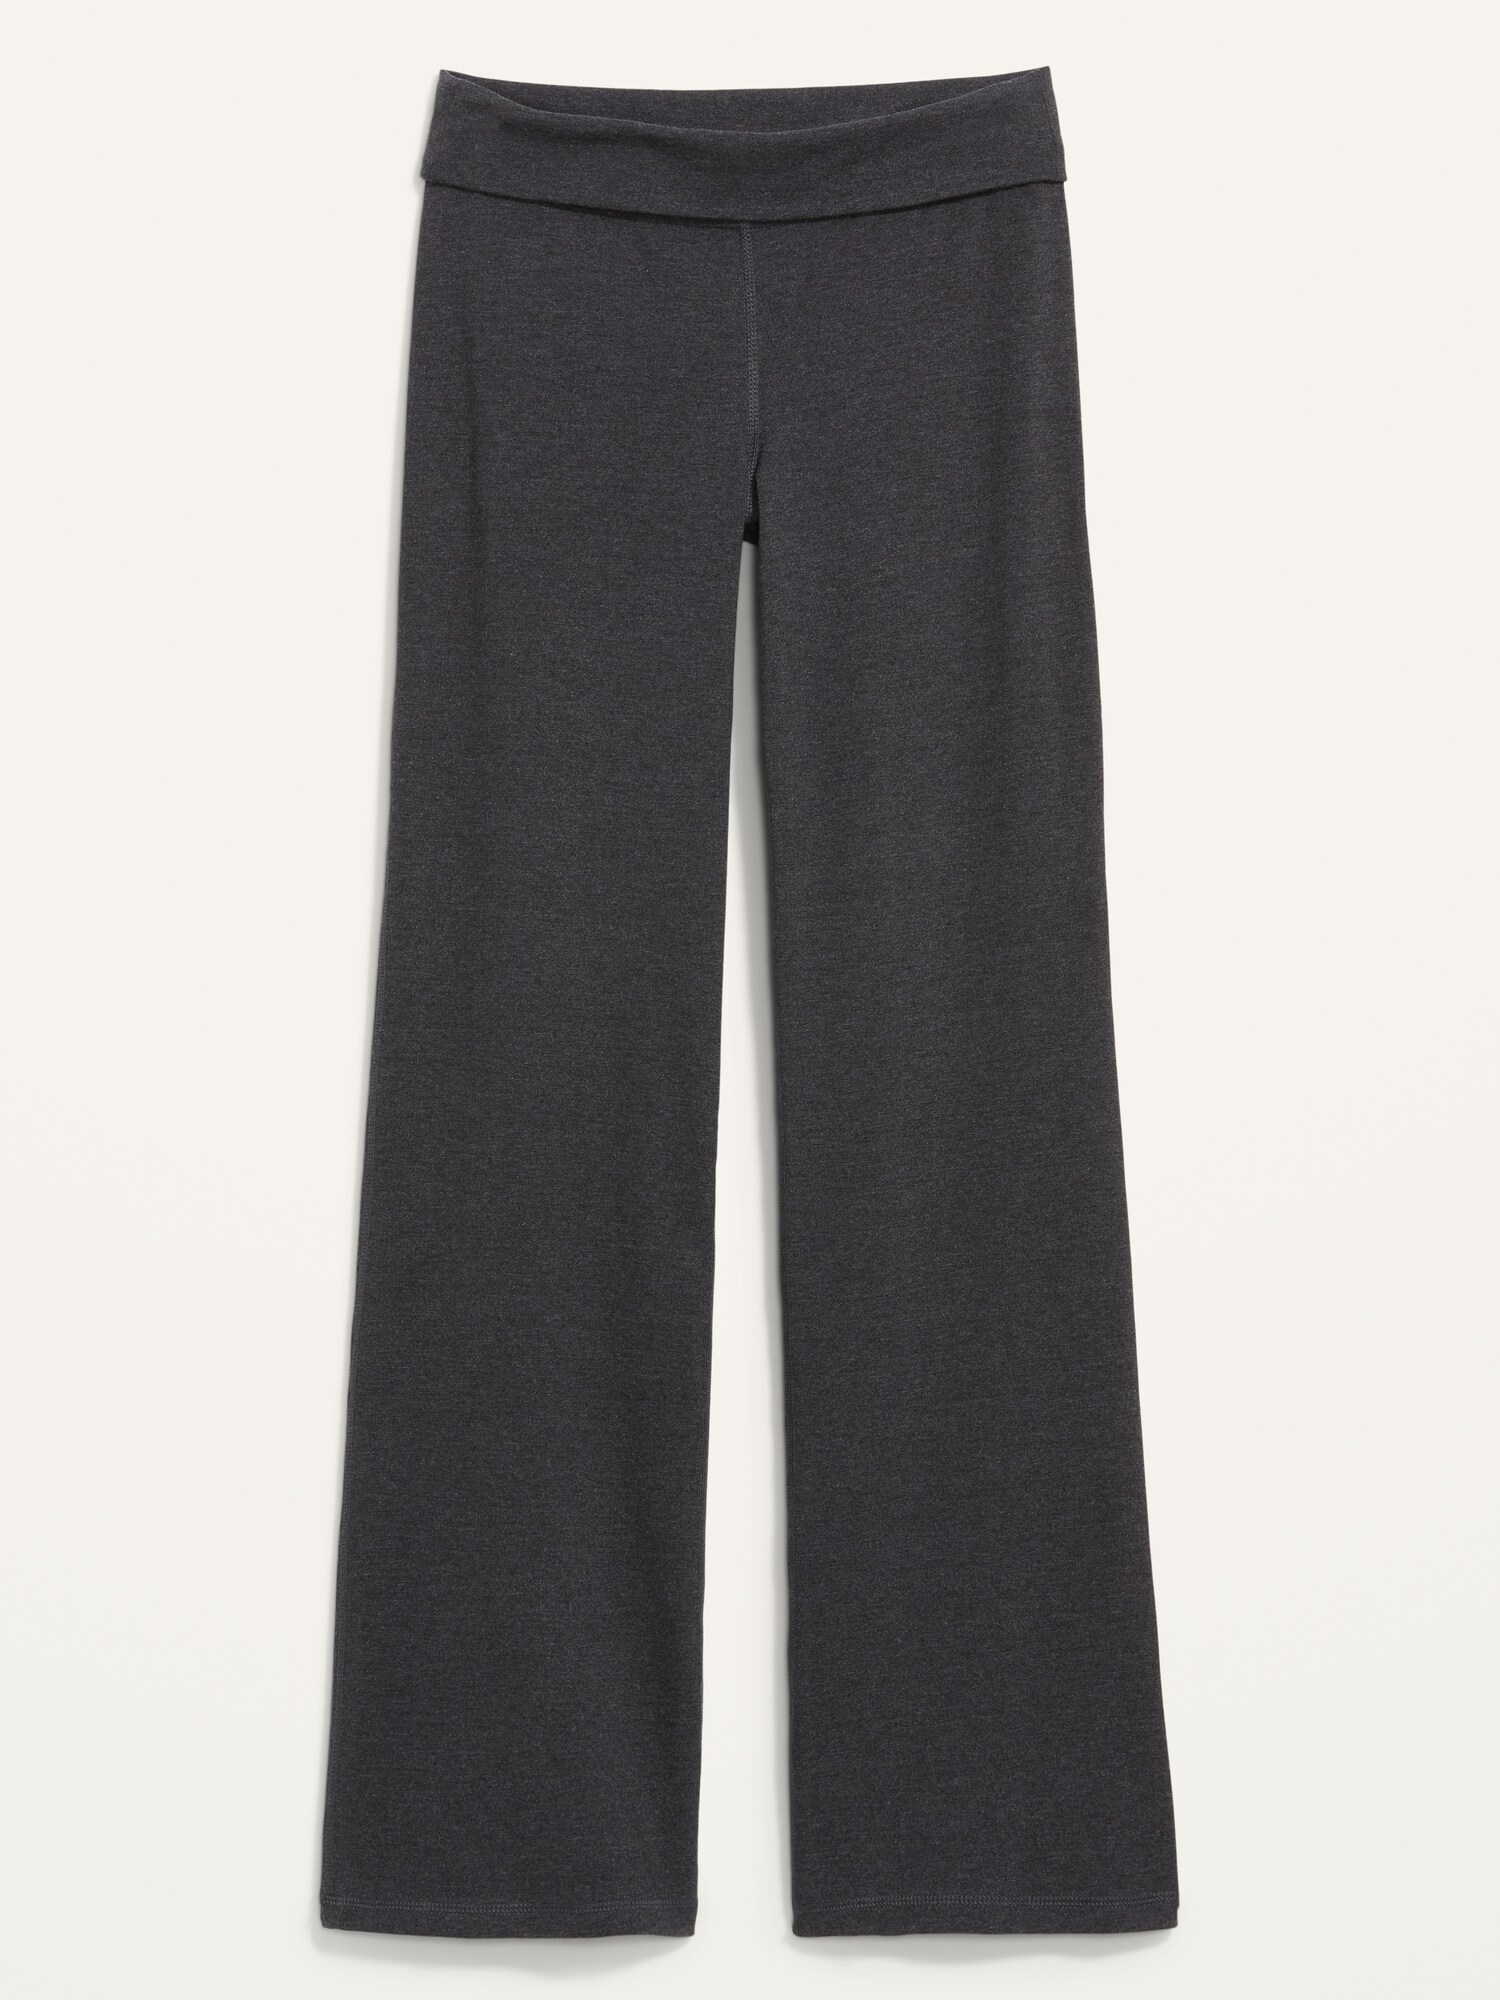 Danskin Now Gray Active Pants Size XL - 36% off